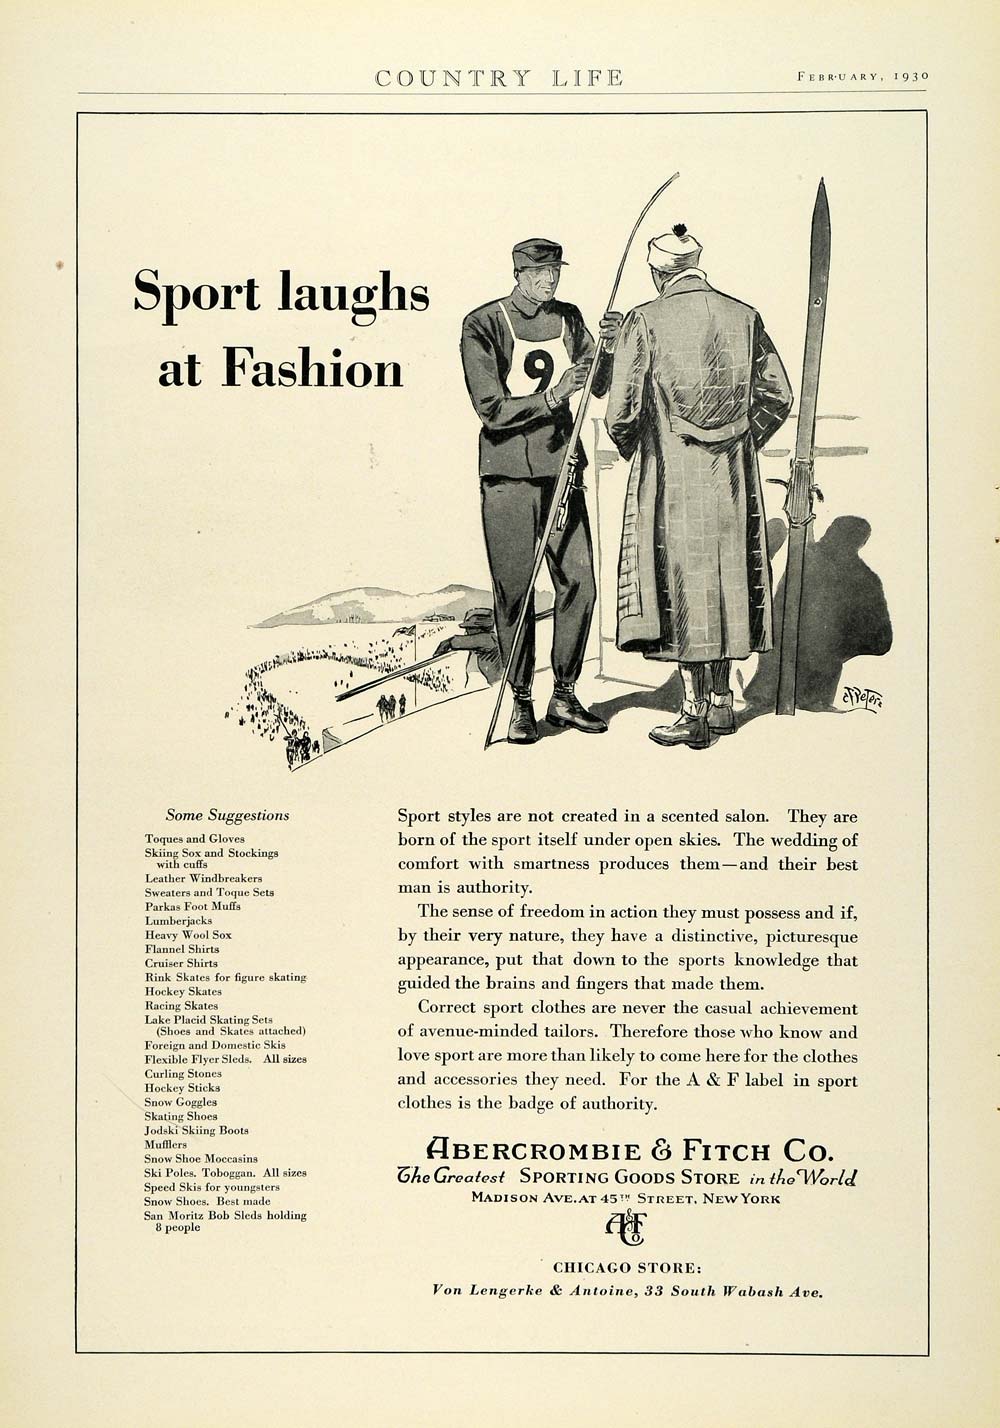 abercrombie & fitch sportswear